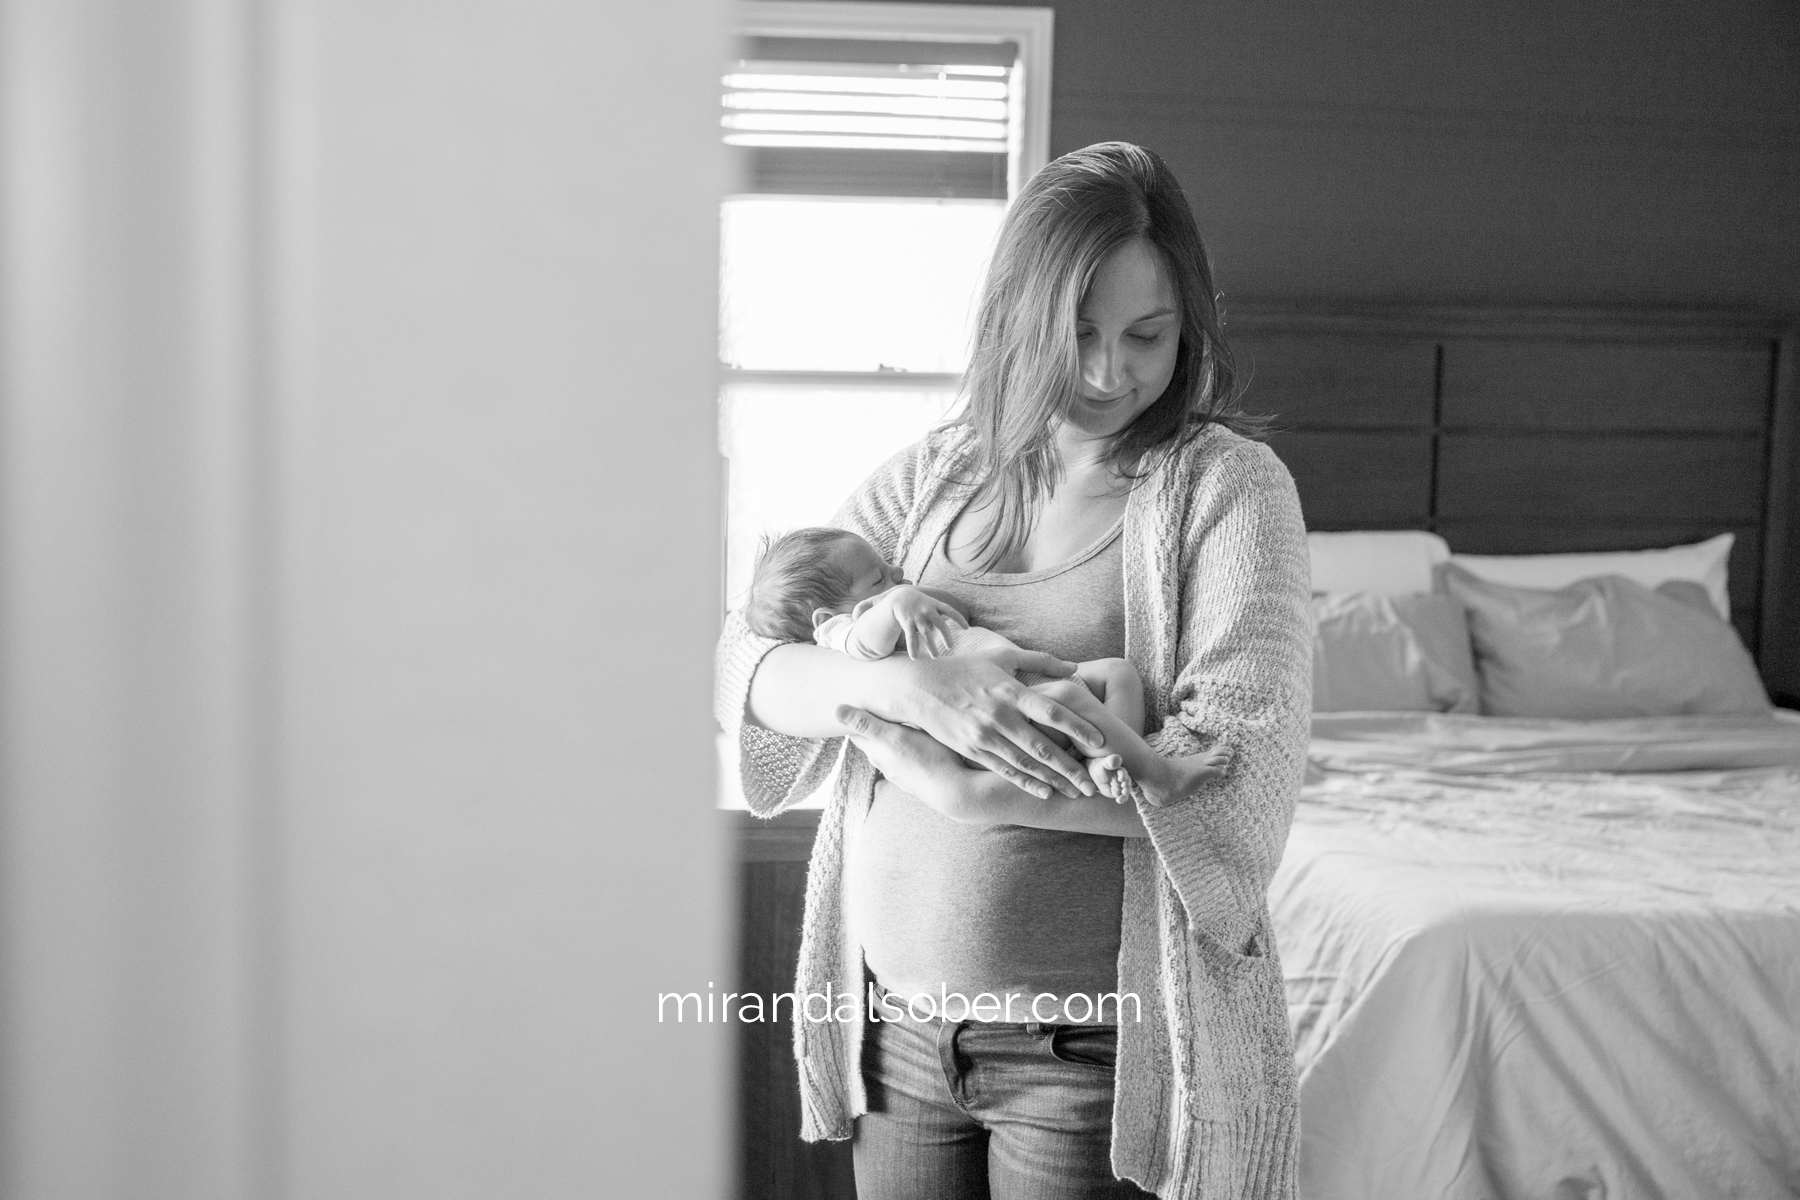 Fort Collins baby photographers, Miranda L. Sober Photography